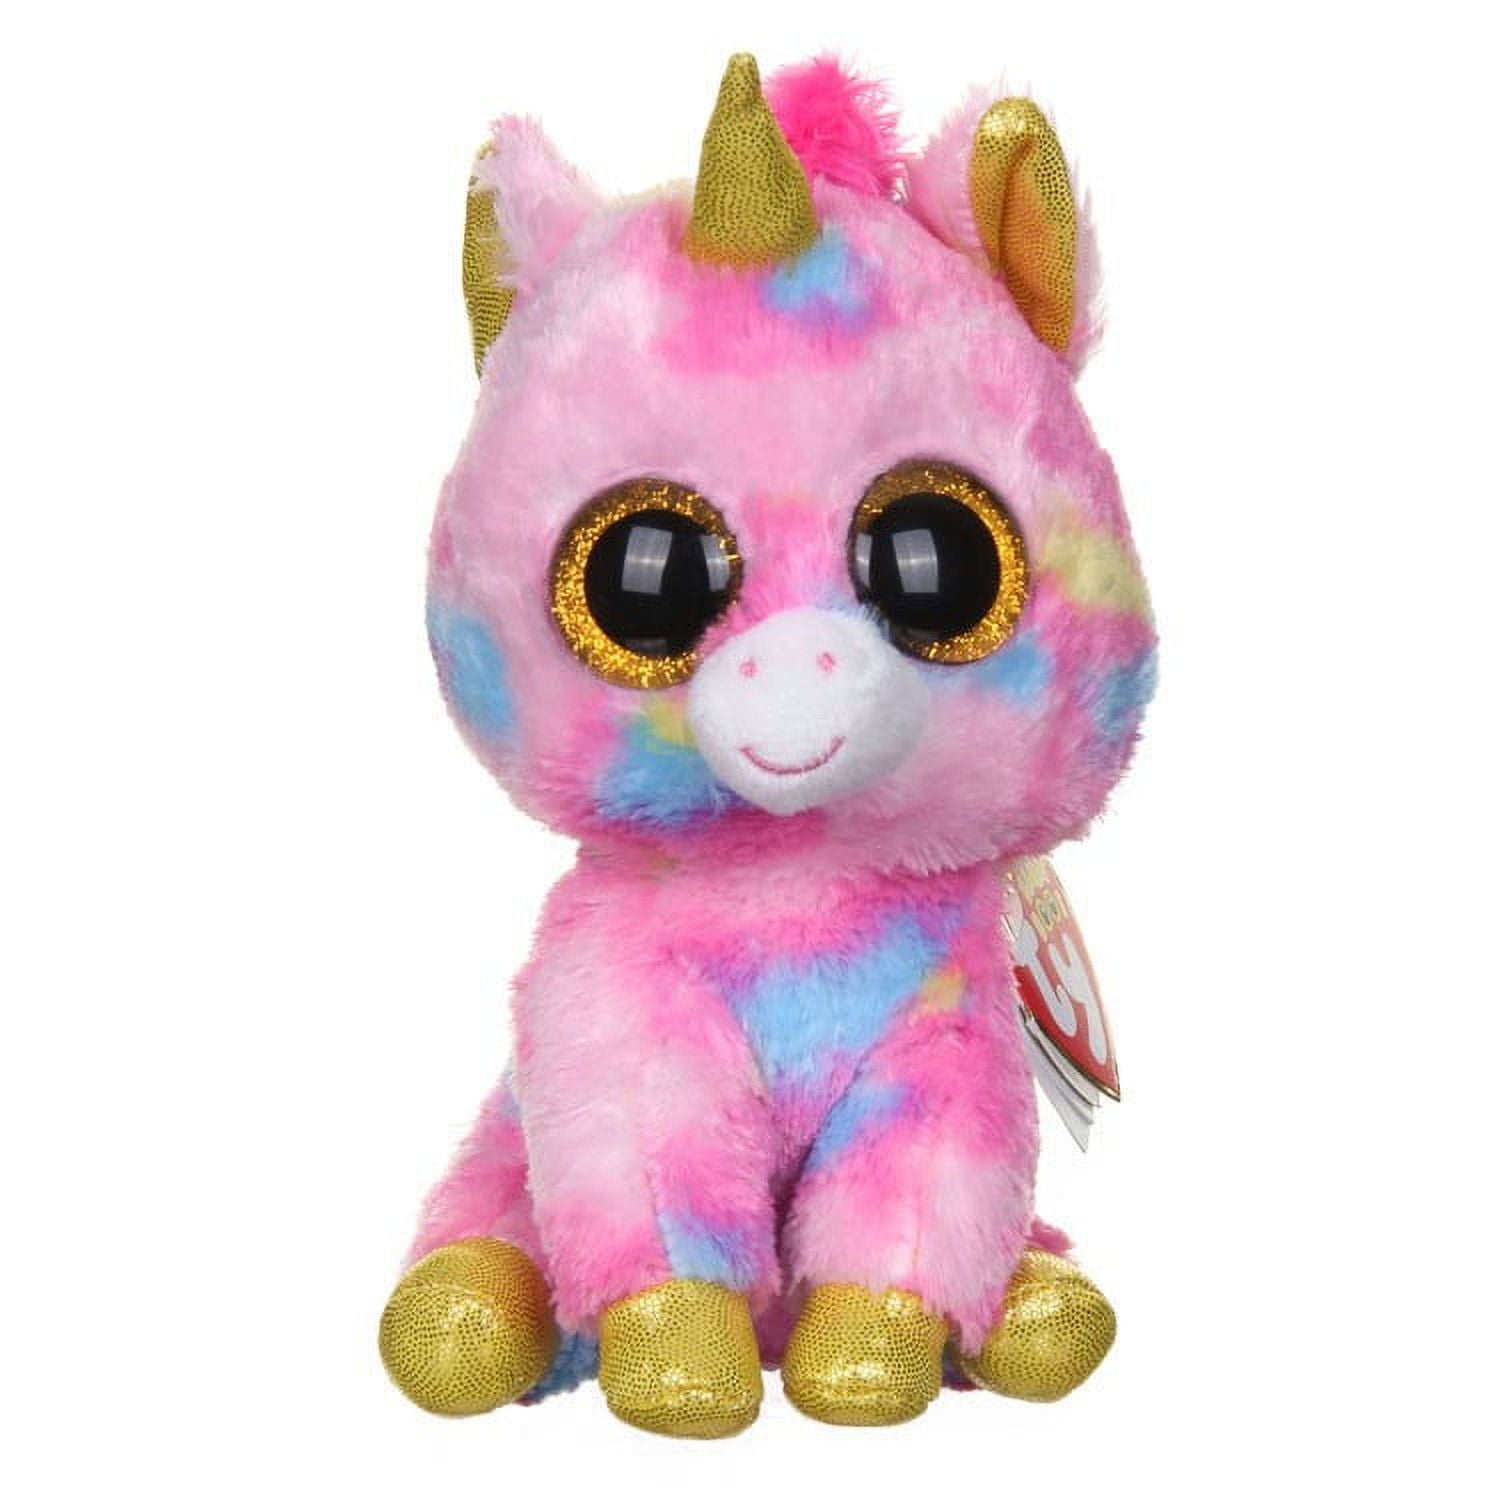 2018 TY Beanie Boo fantasia Unicorn Plush 